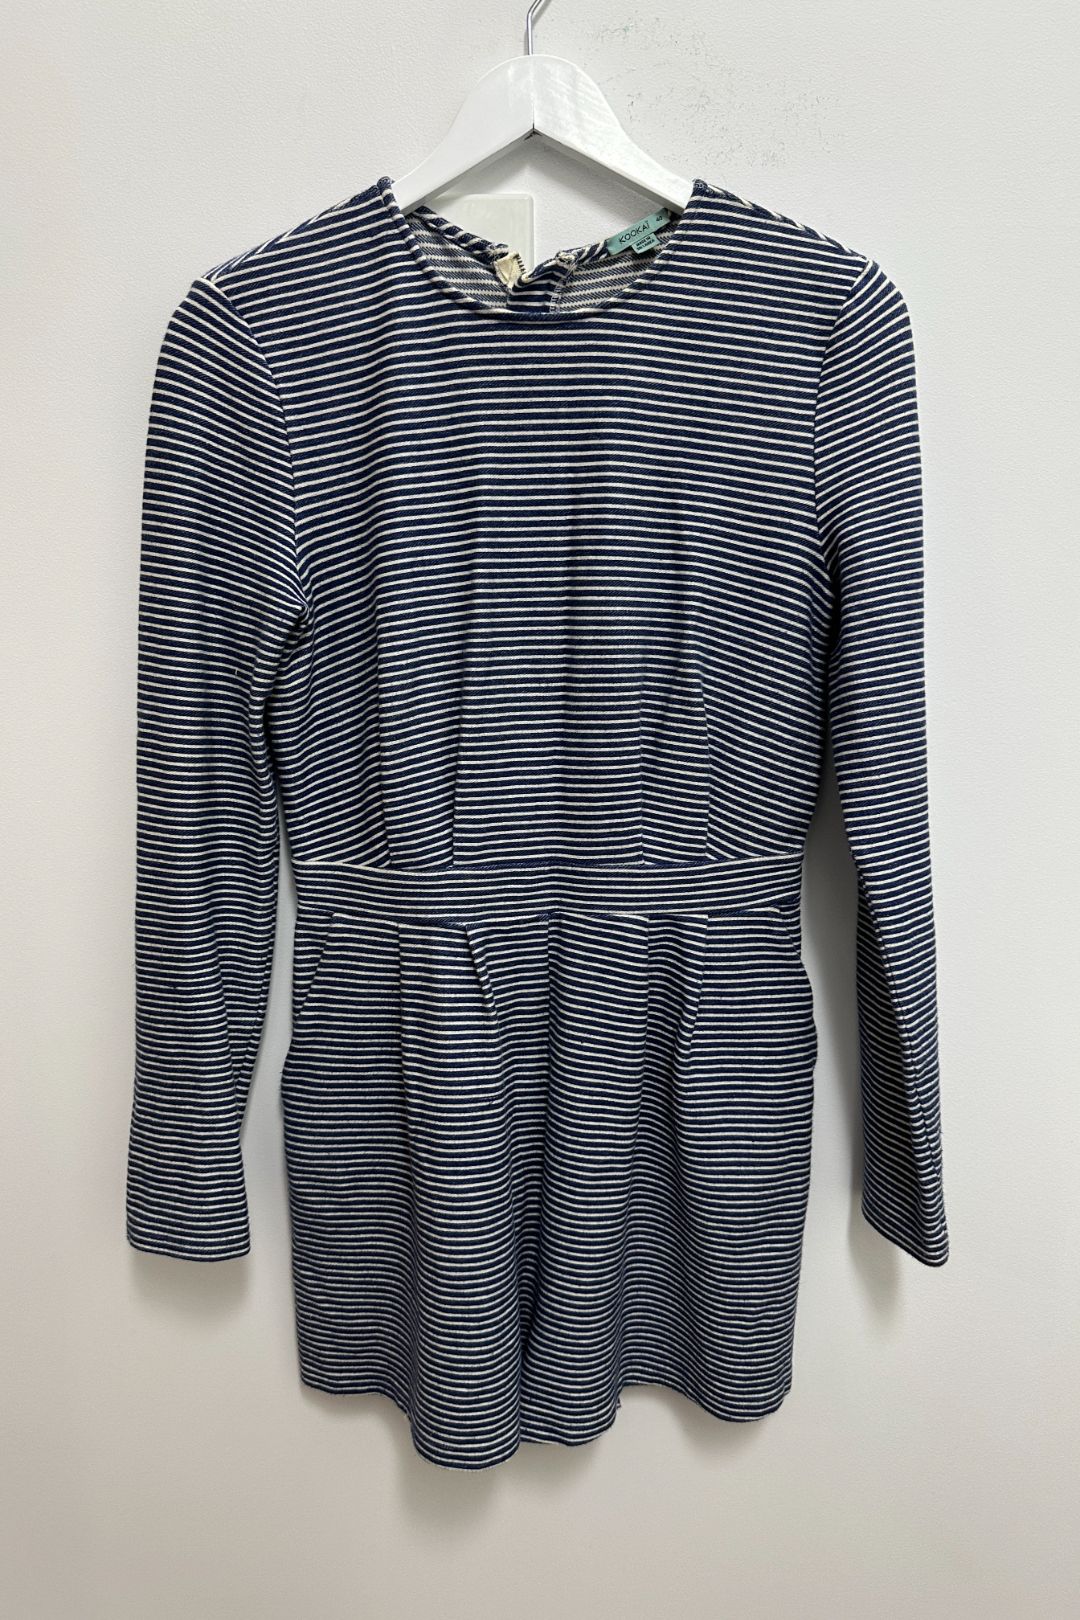 Kookai Blue and White Stripe Long-Sleeved Playsuit 